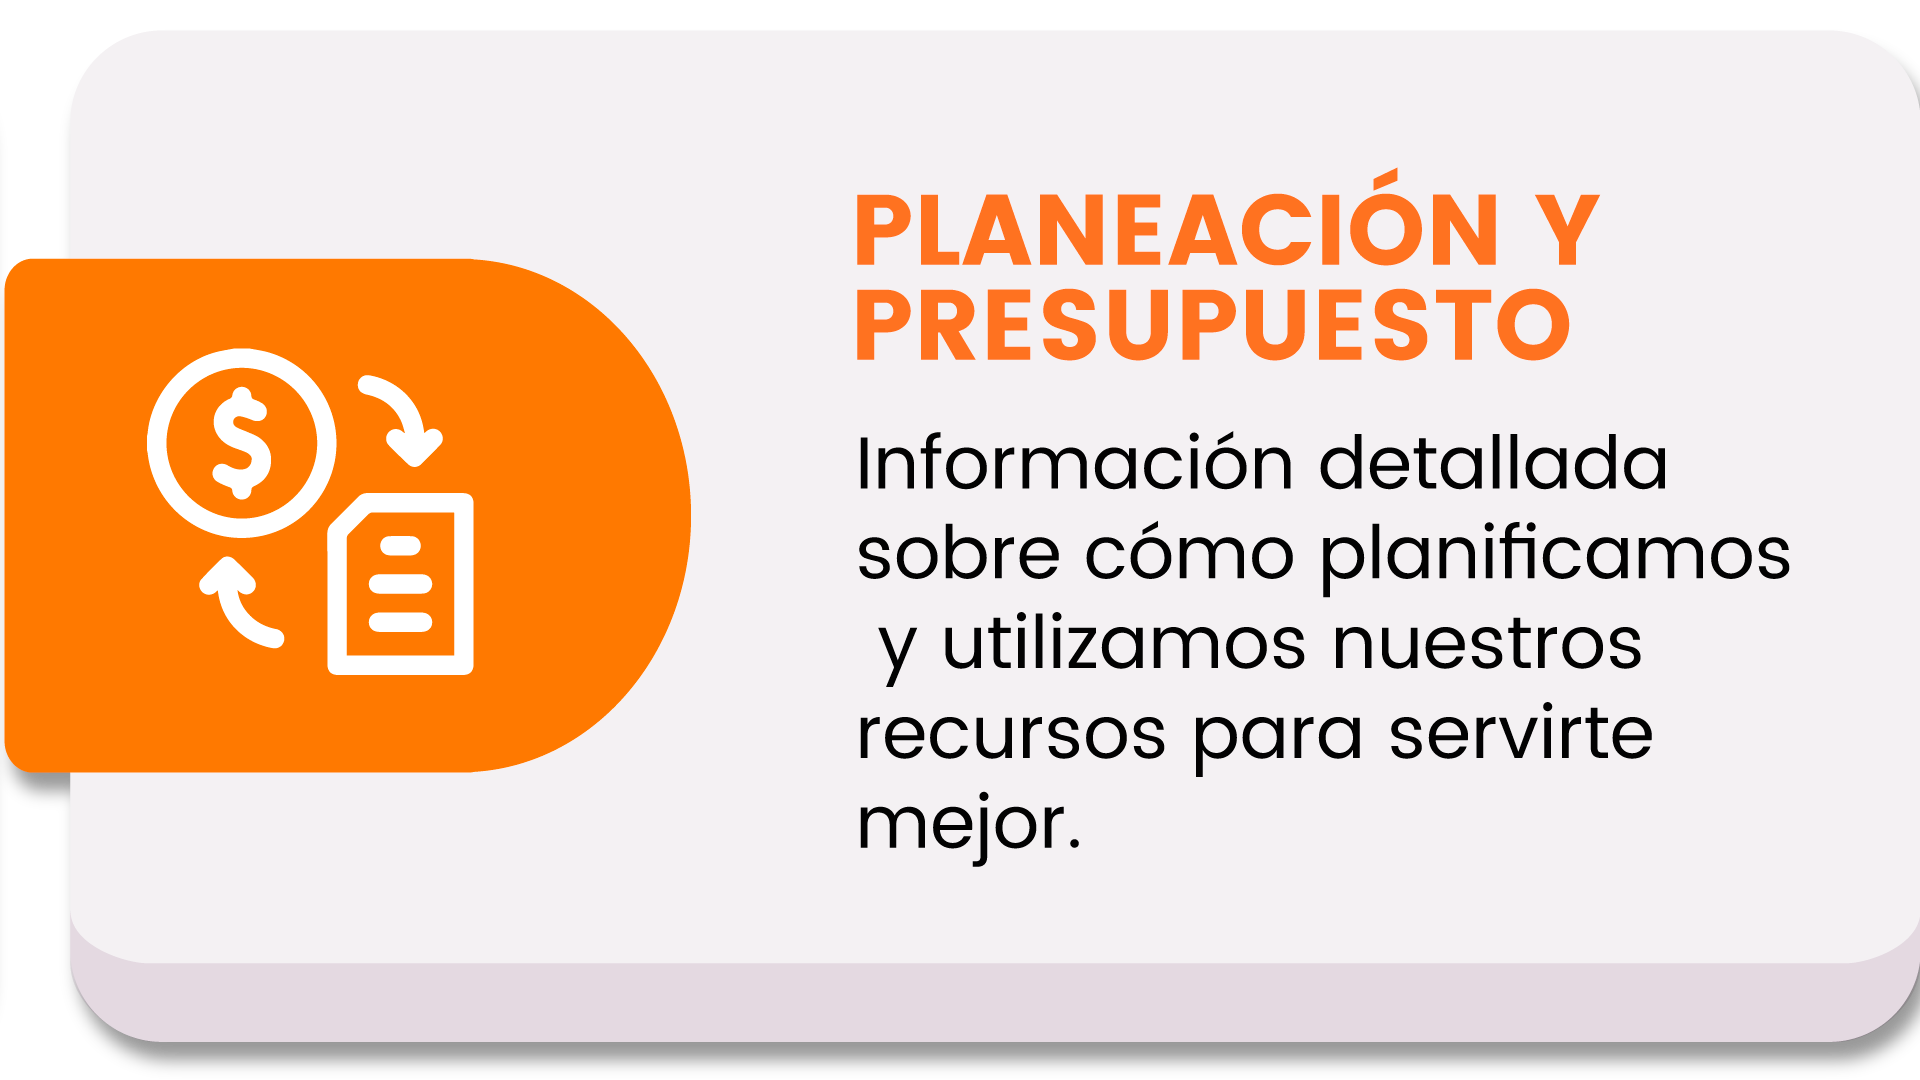 2_-_Planeacion.png - 93.25 kB